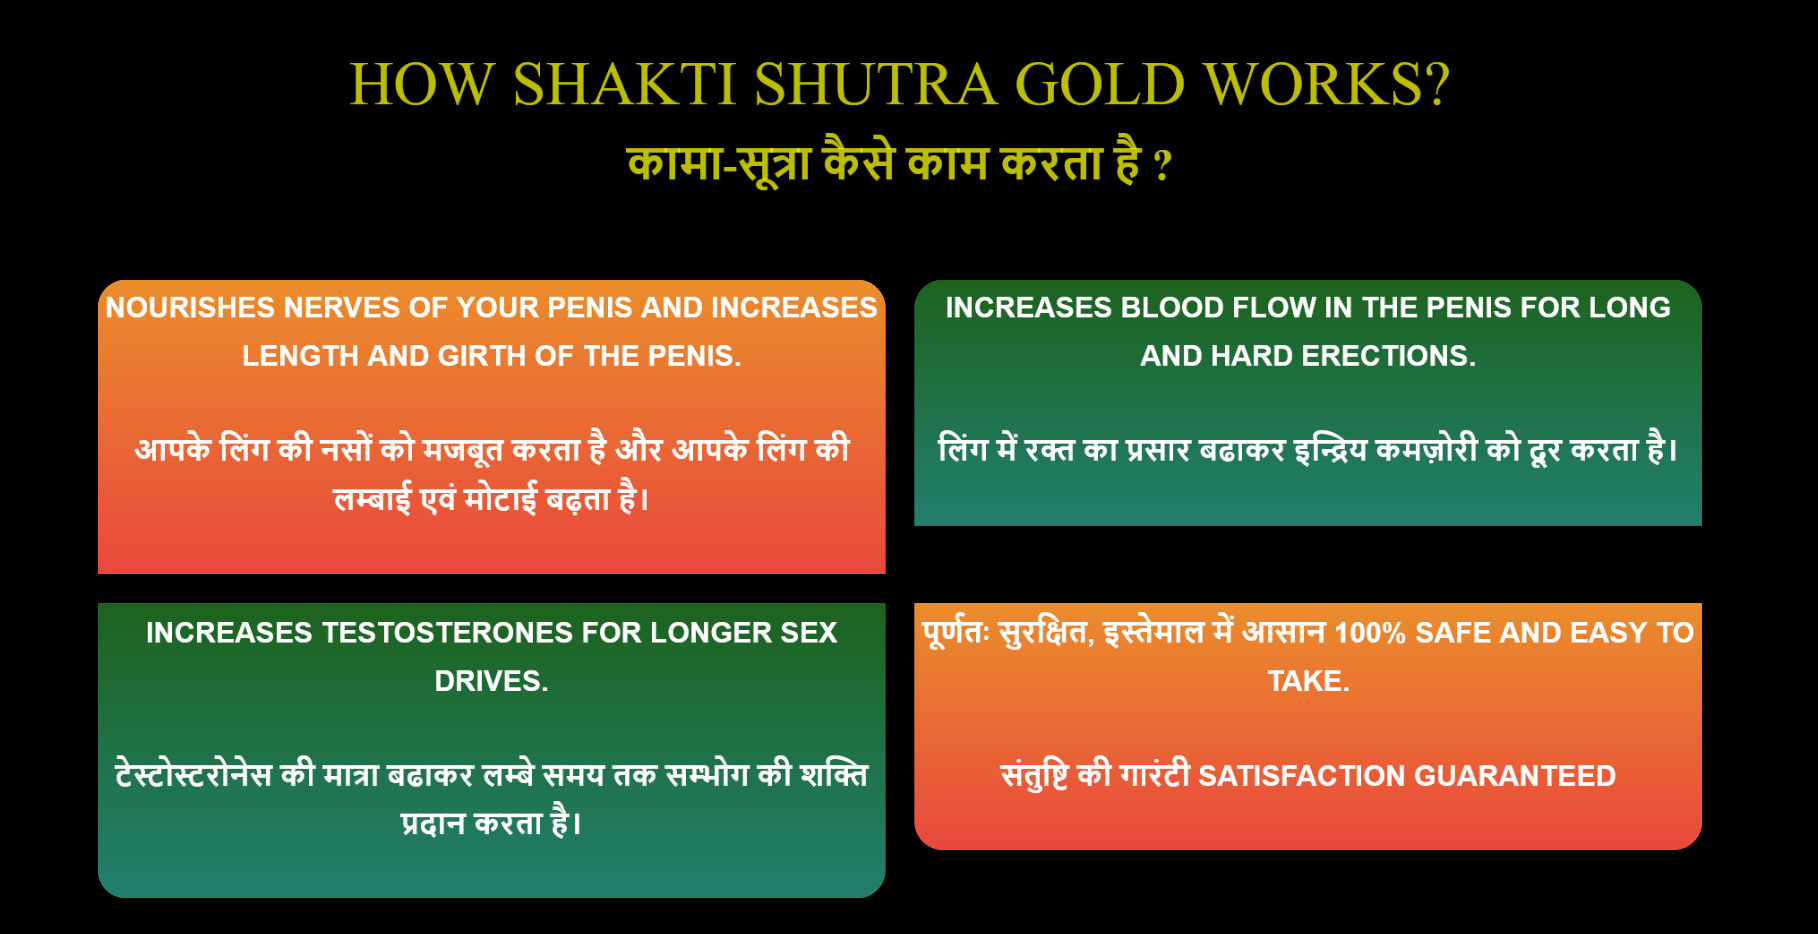 Shakti Shutra Gold